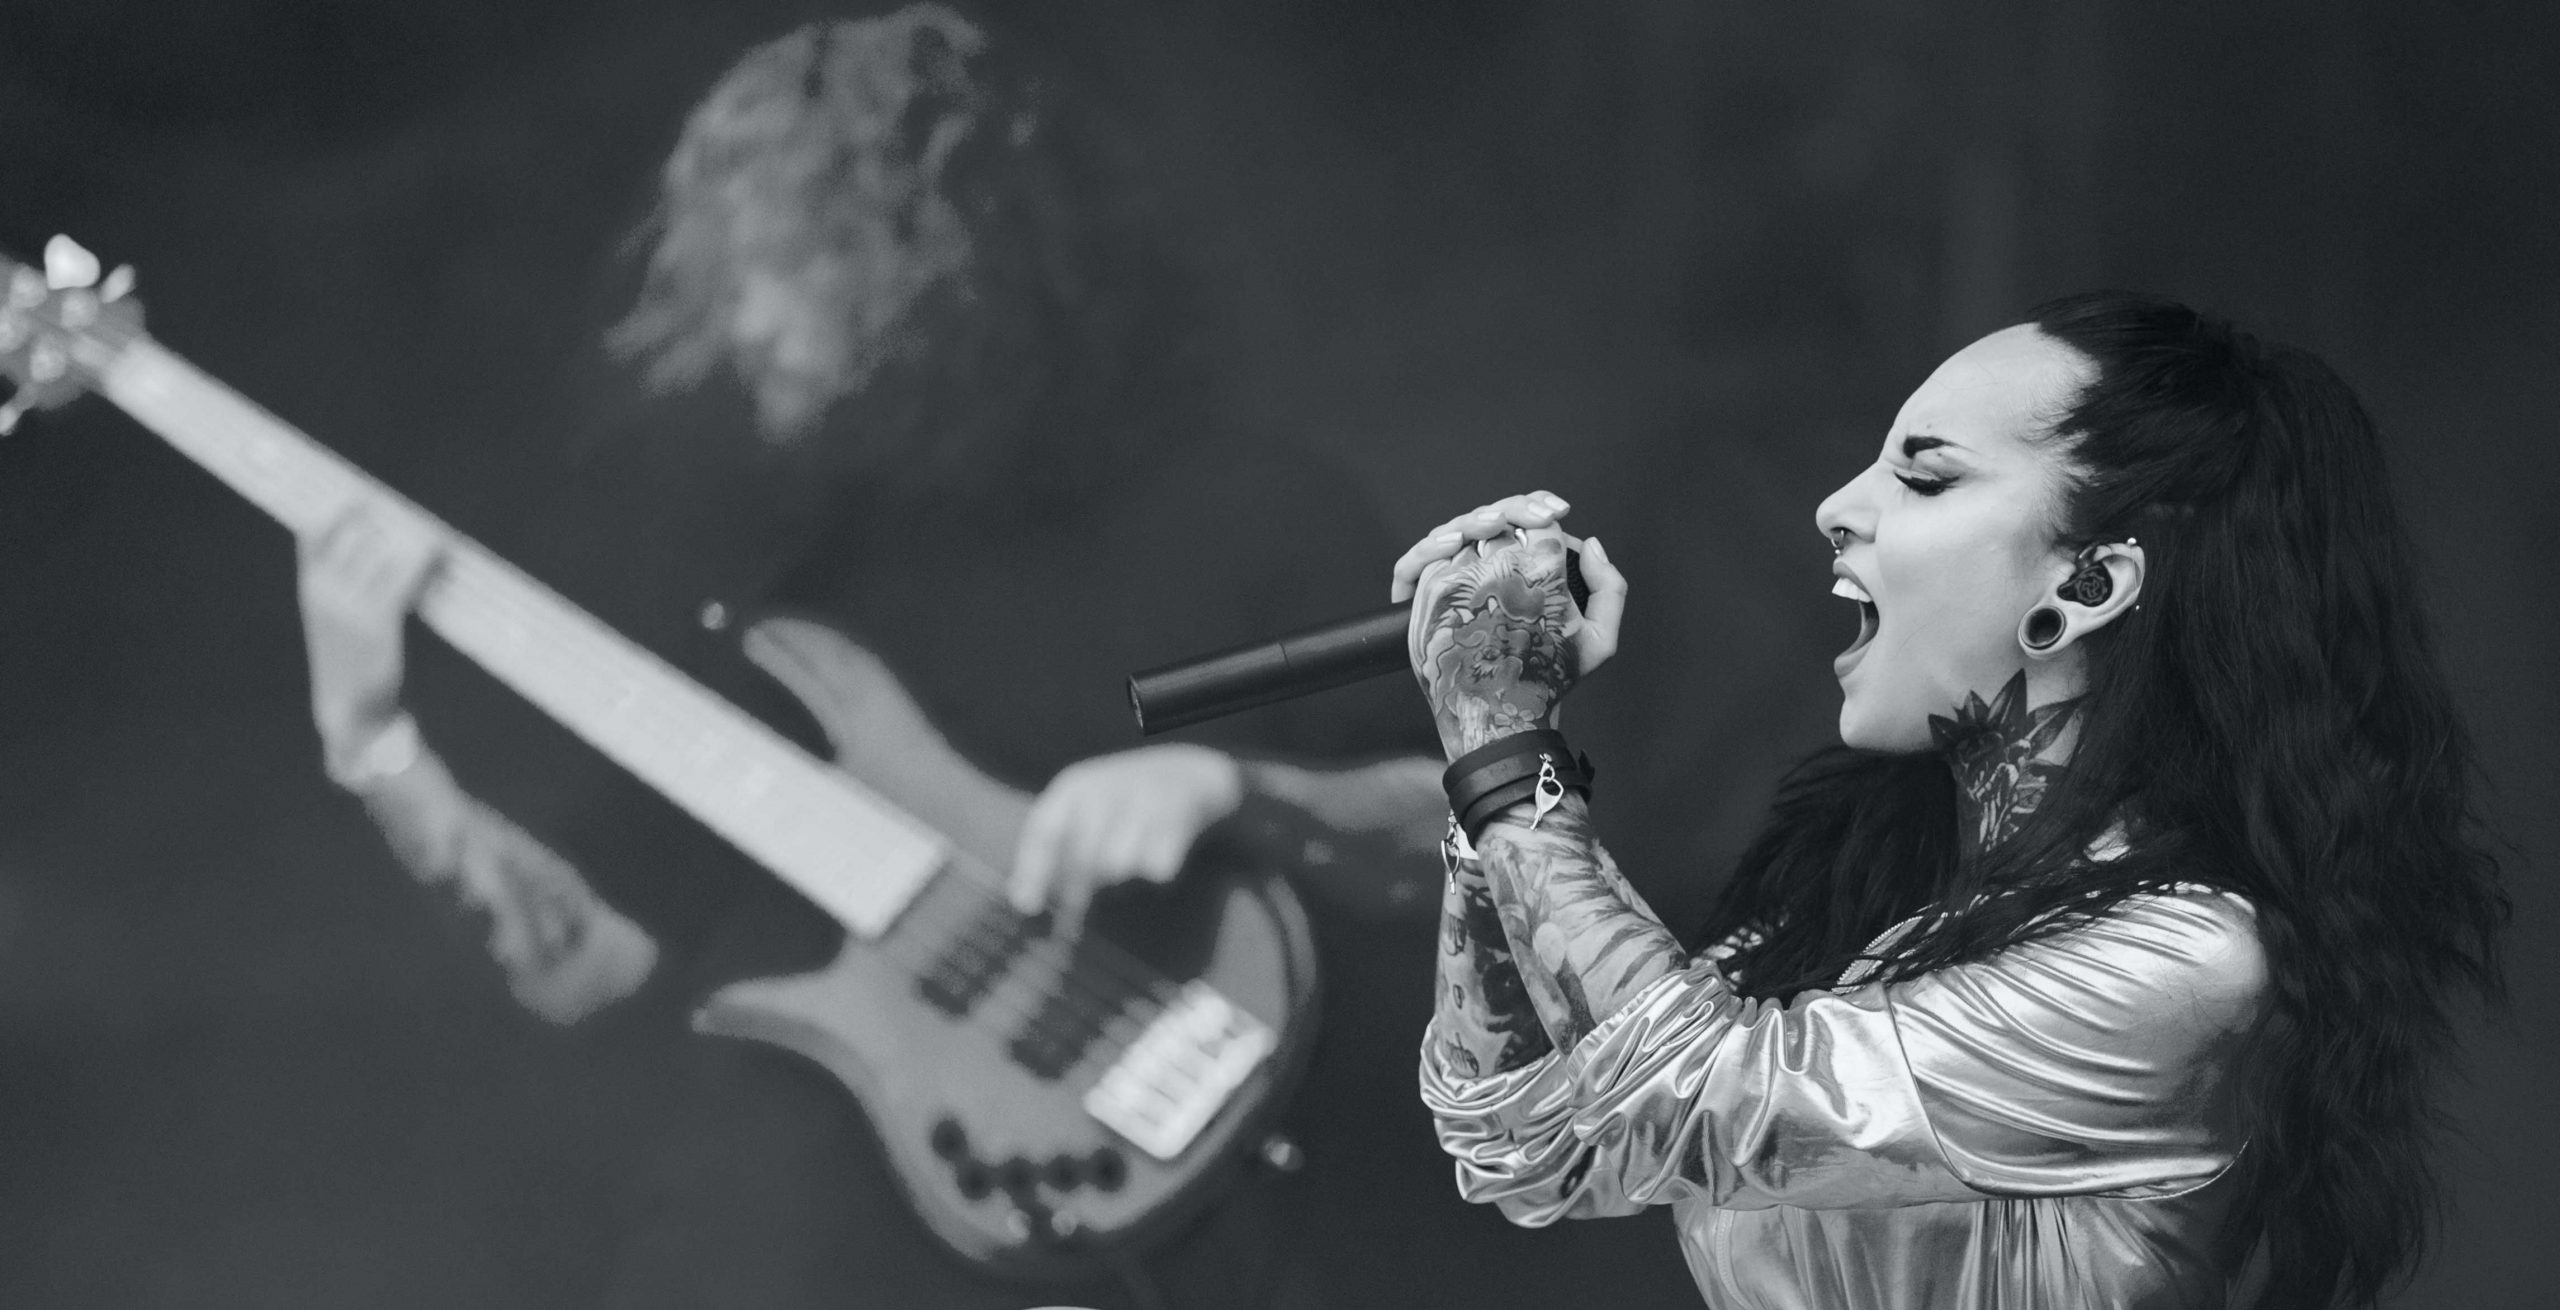 Black and white image of a metal vocalist (Tatiana Shmayluk) screaming